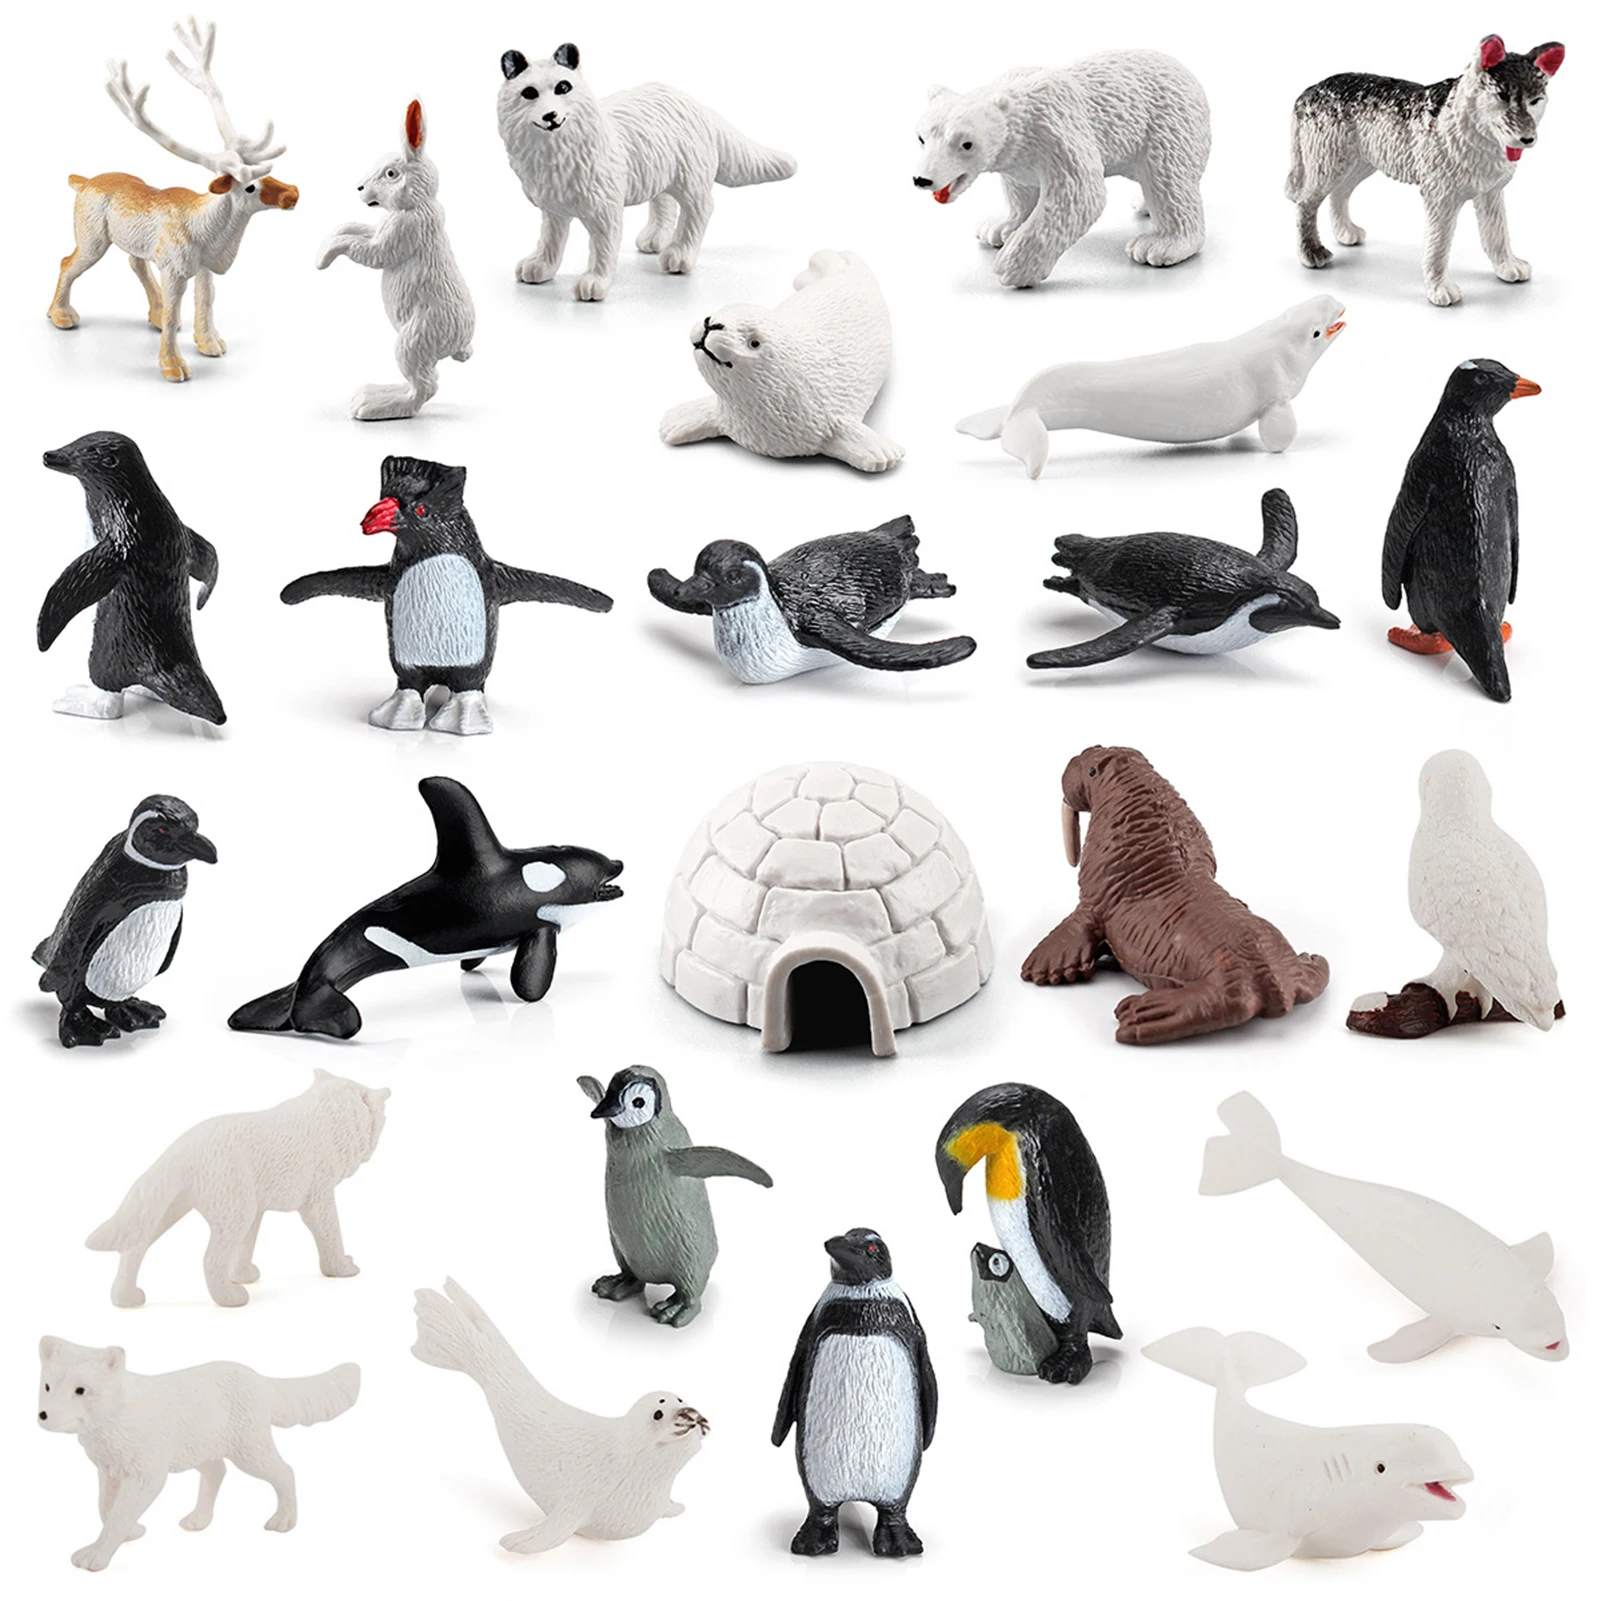 

26pcs North Pole Animal Toy Figurines Set Penguins Reindeer Beluga Whales Arctic Animal Kit Model Educational Toy Birthday Gifts